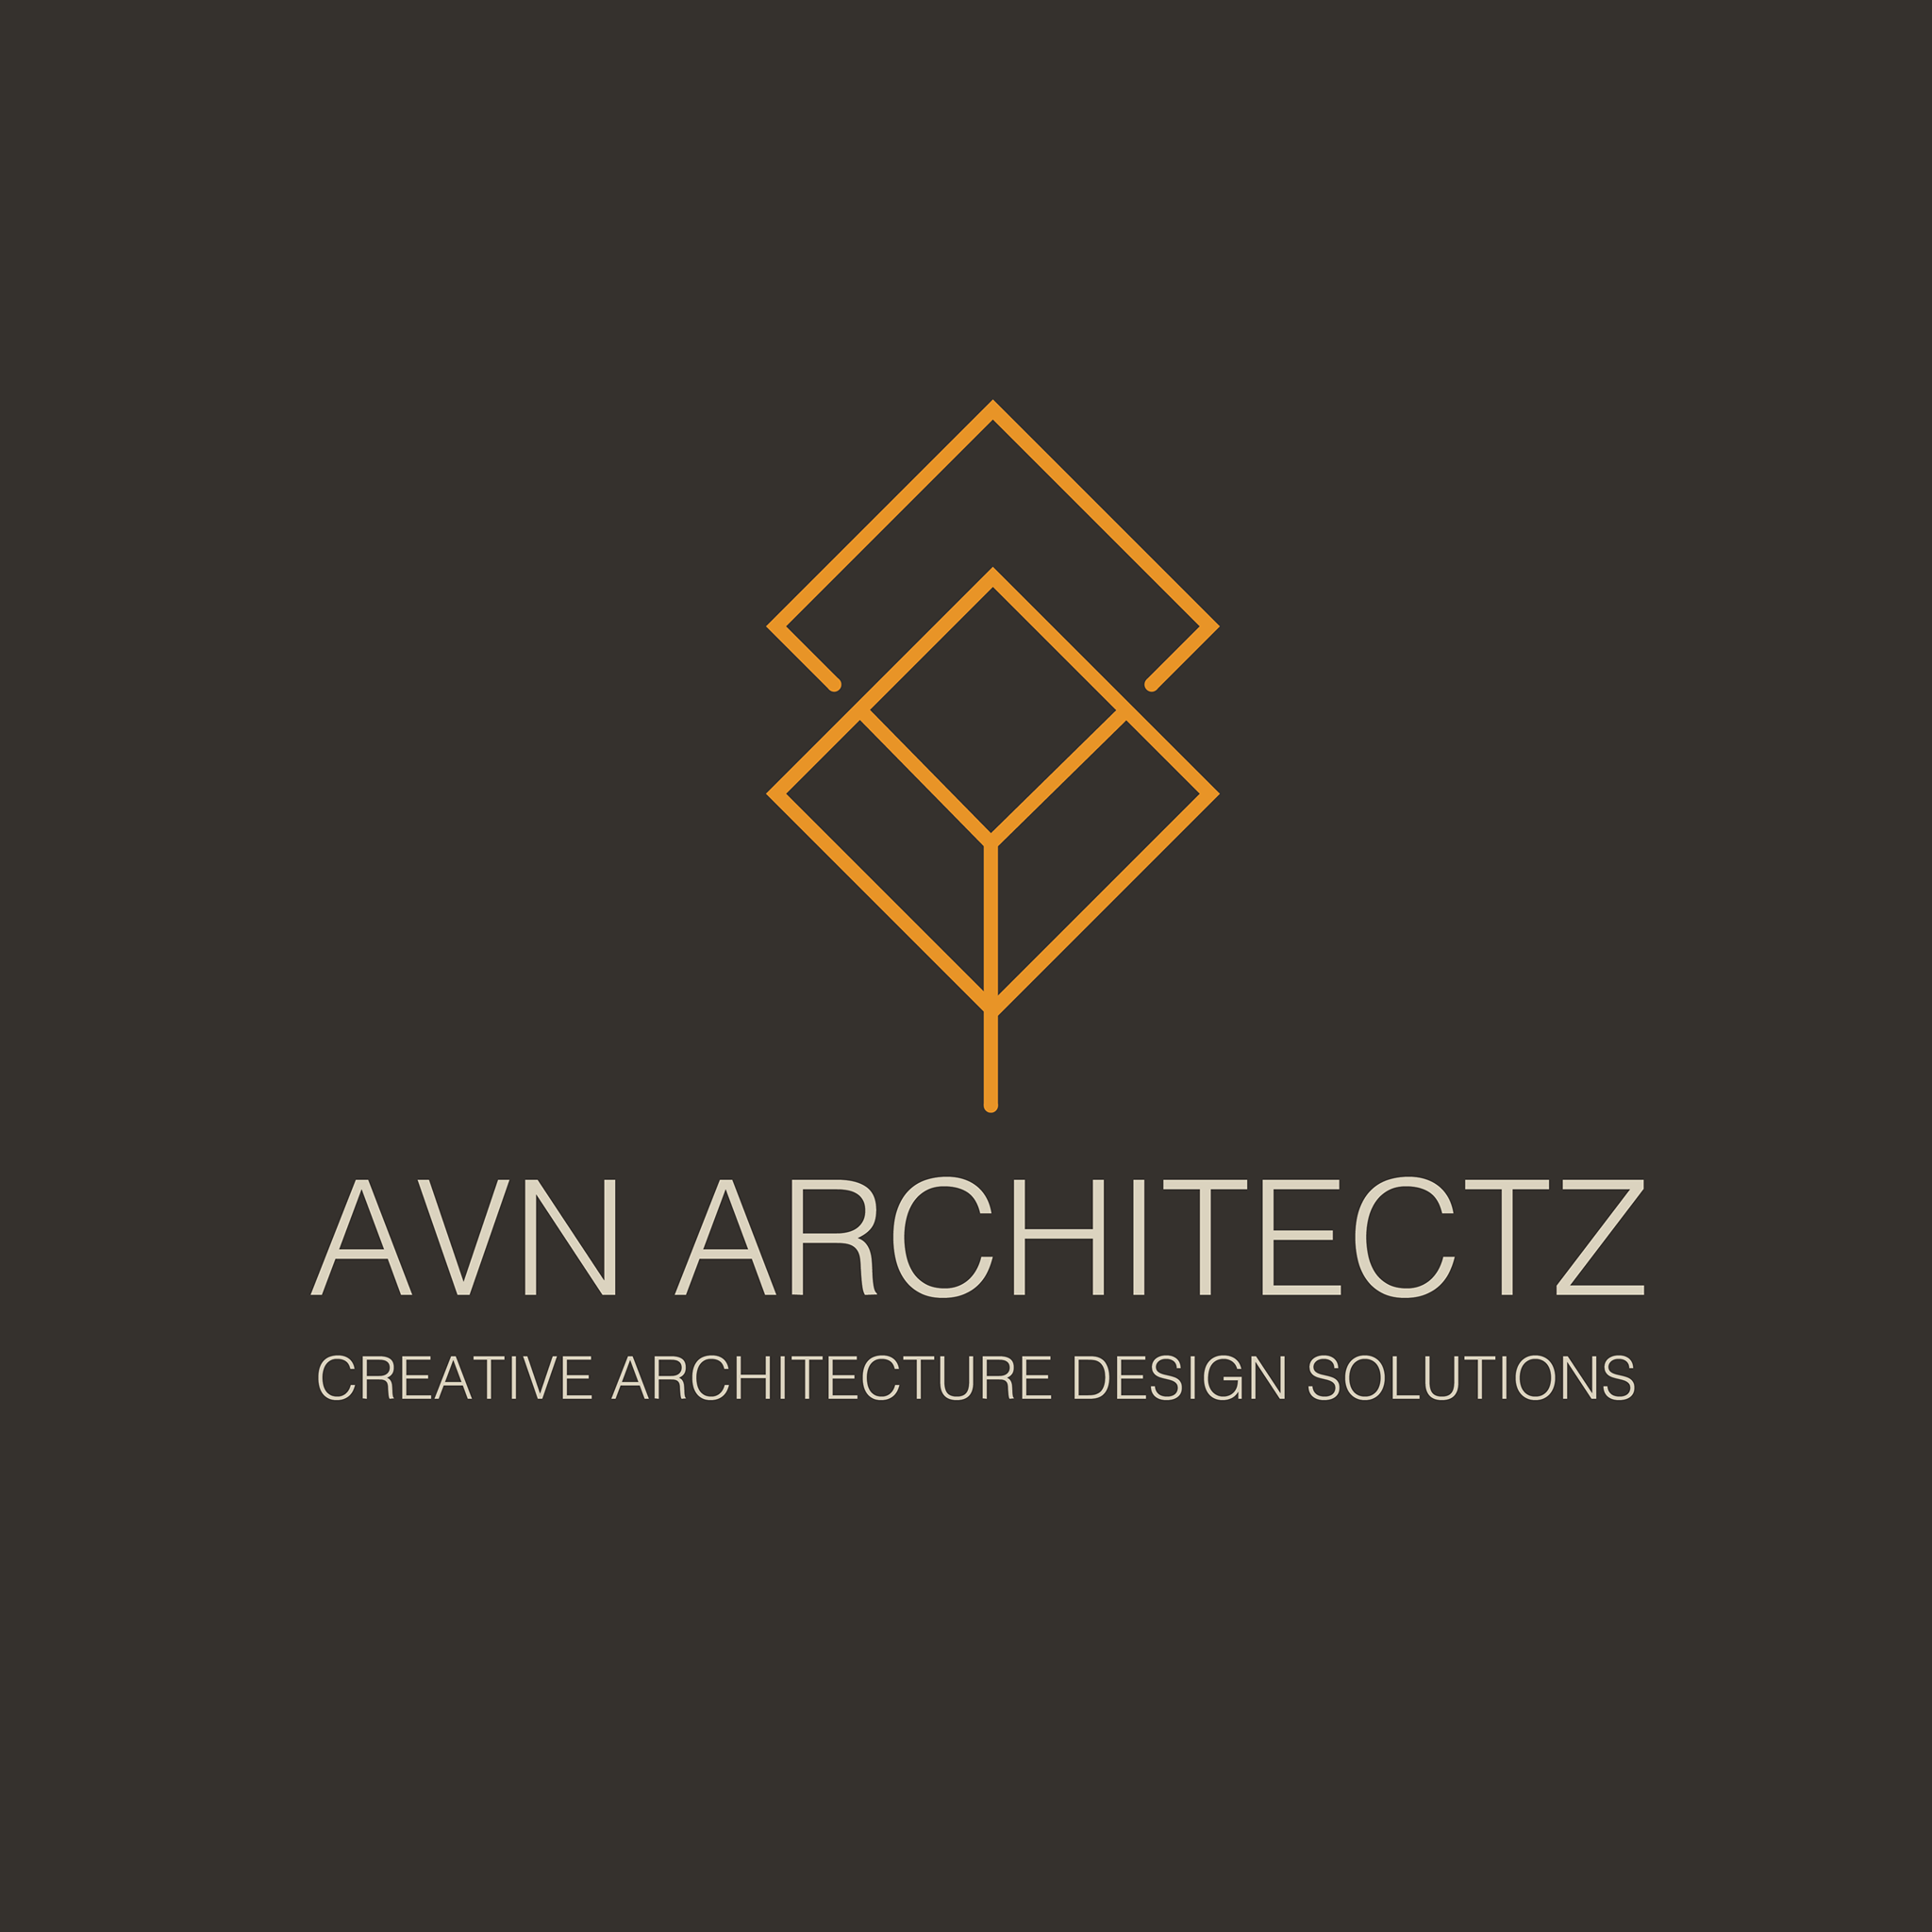 AVN Architectz|Architect|Professional Services